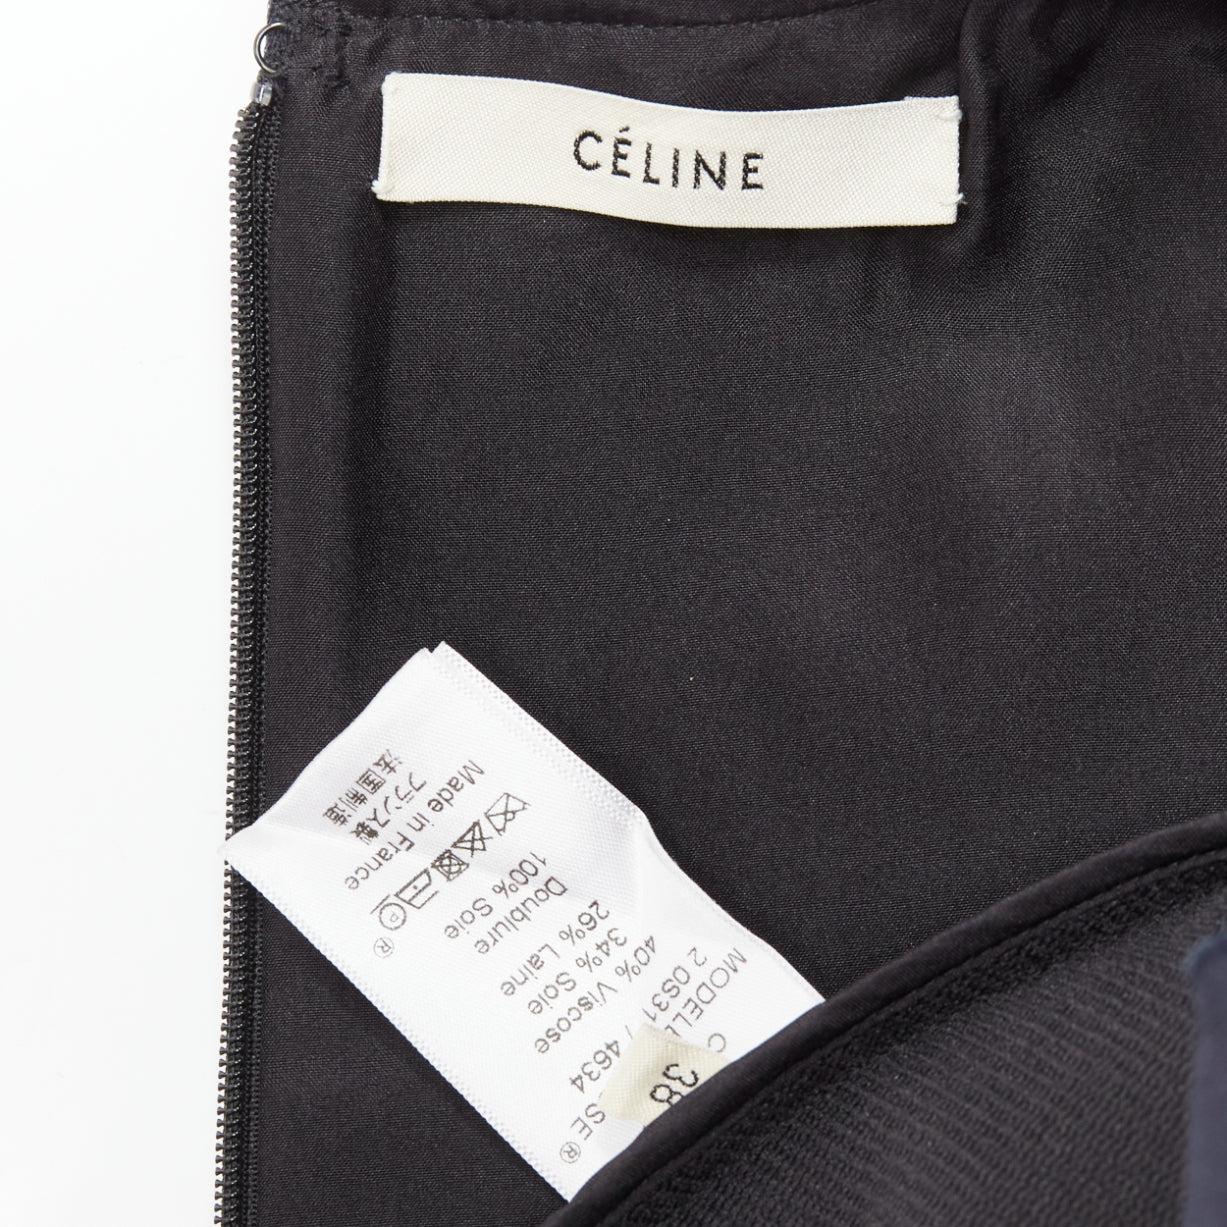 OLD Celine Phoebe Philo Runway noir twist knot splice cropped vest top FR38 M en vente 4